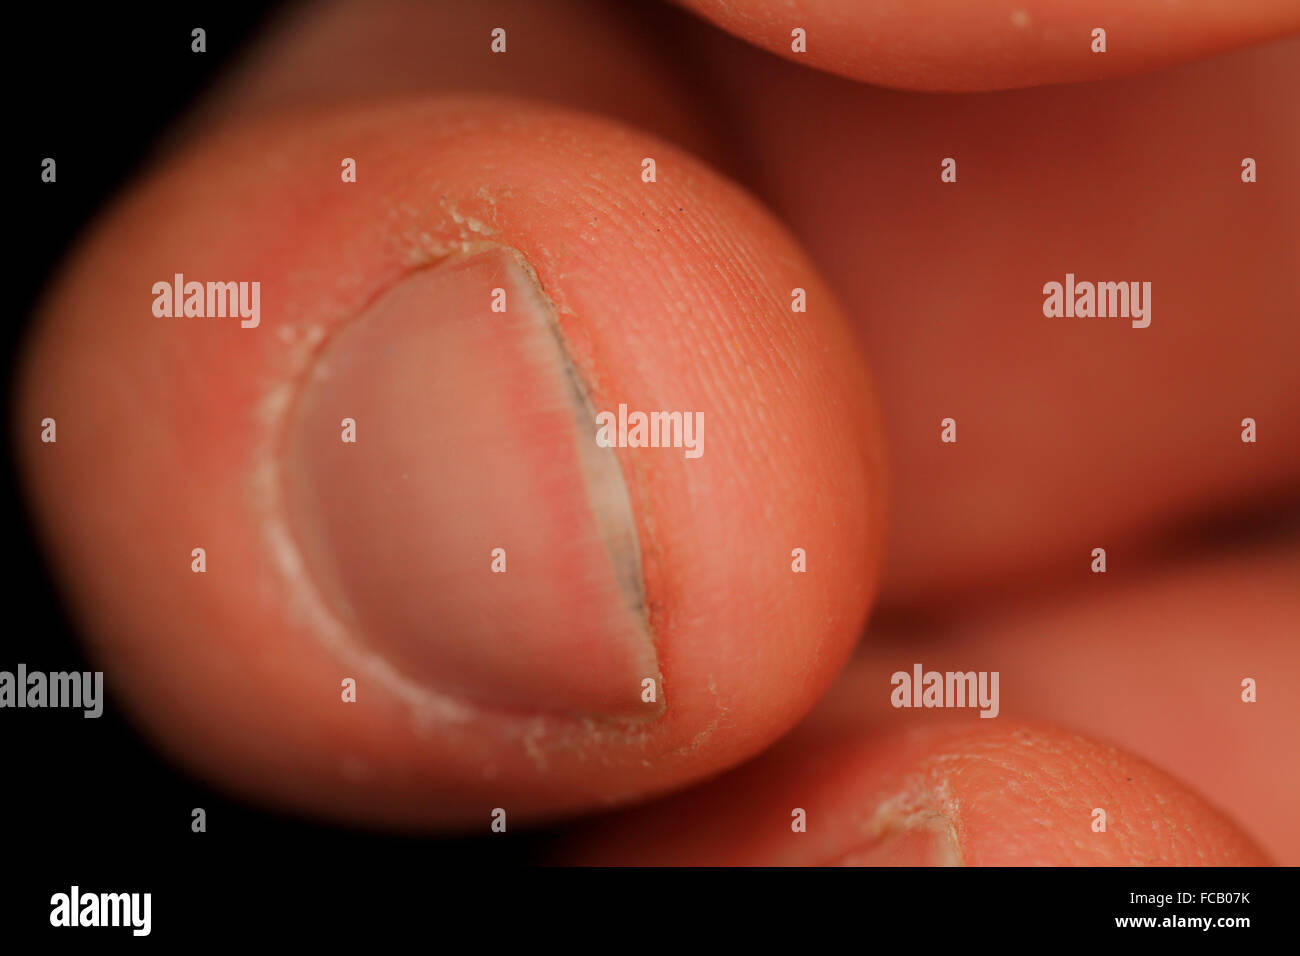 Fingertip showing dirty fingernail. Stock Photo